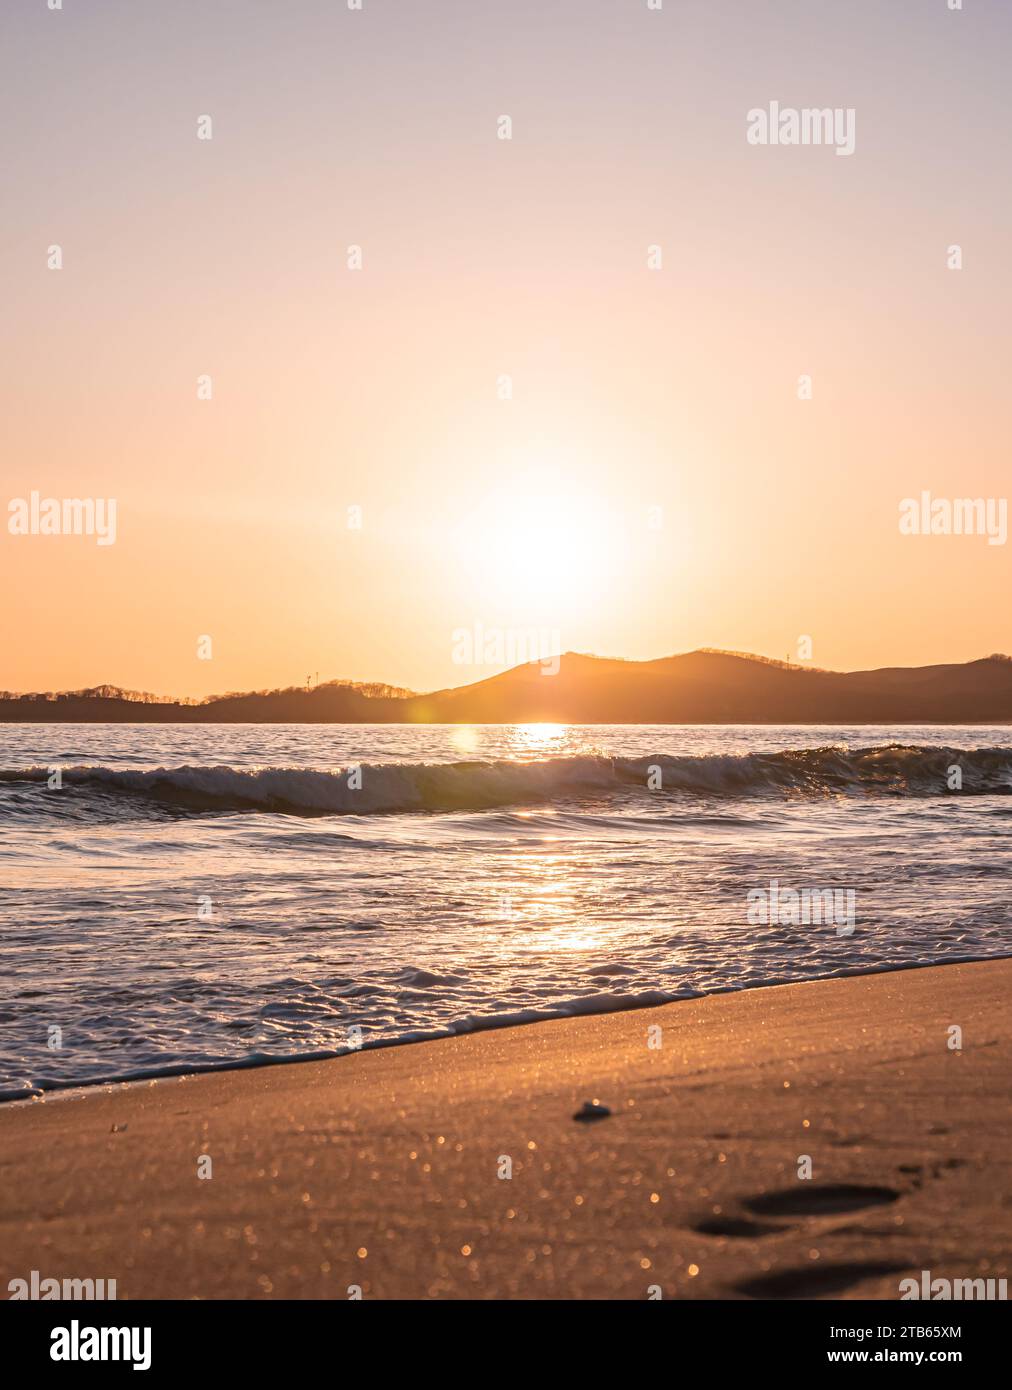 Sunset on the beach. Orange and golden sunset sky calmness tranquil relaxing sunlight summer mood. Stock Photo